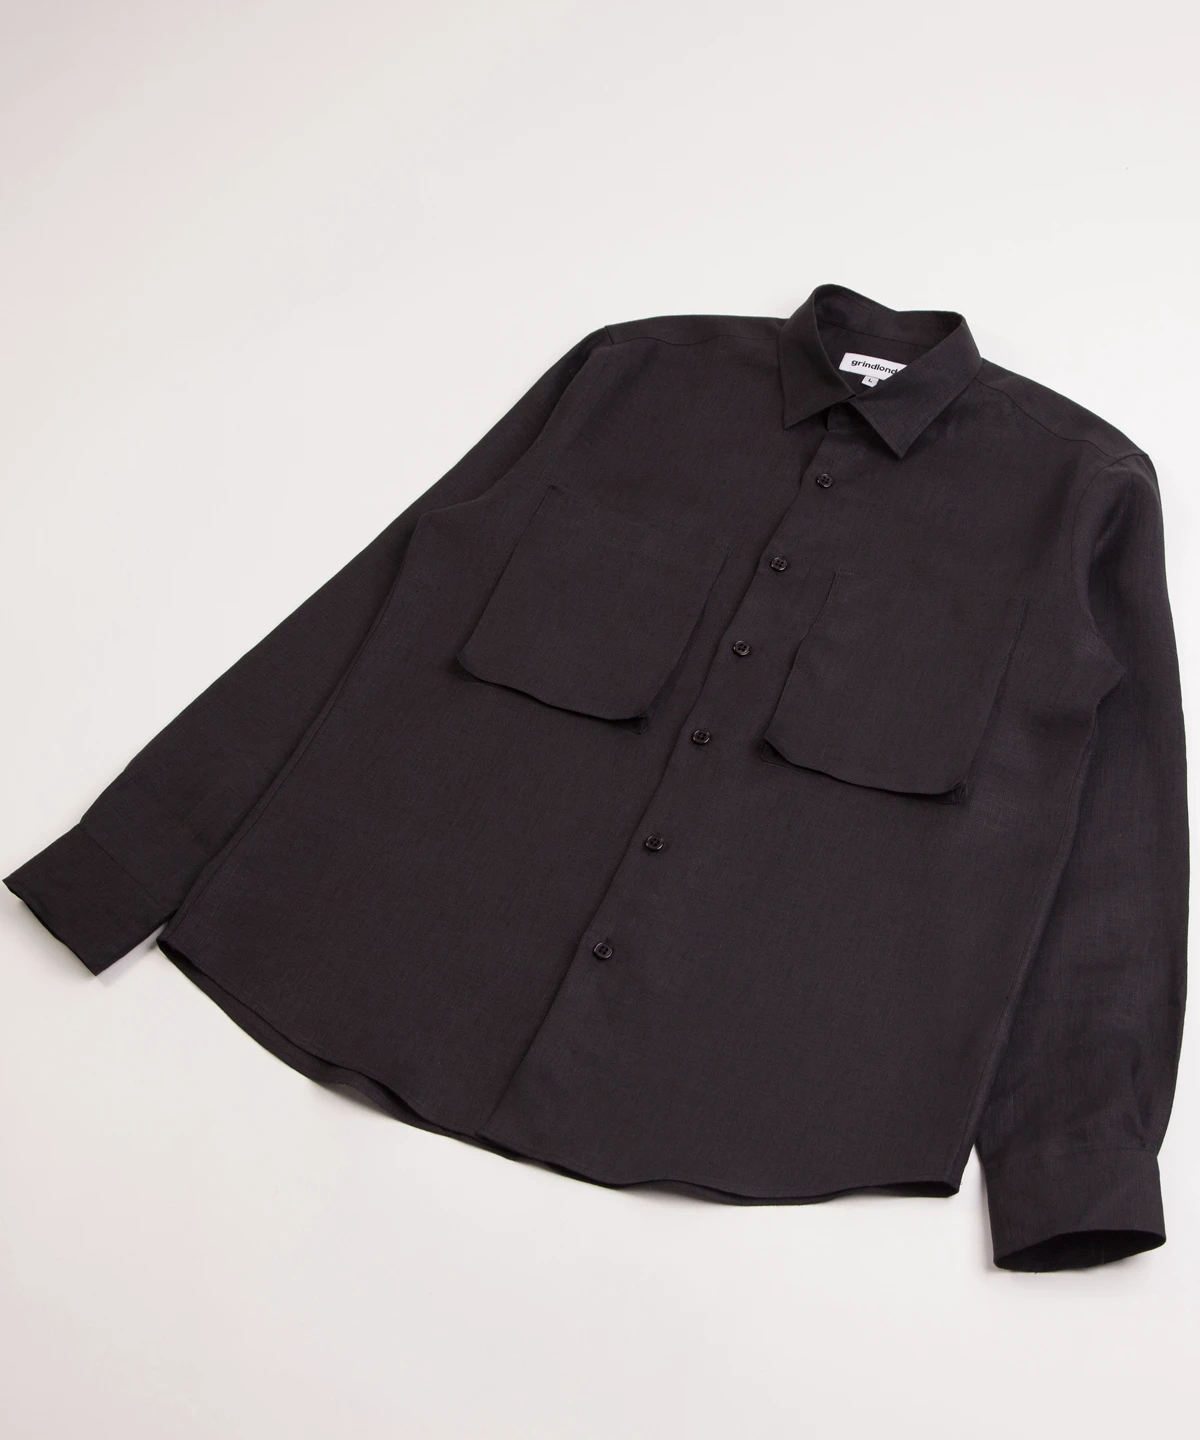 grindlondon linen long sleeve shirt black